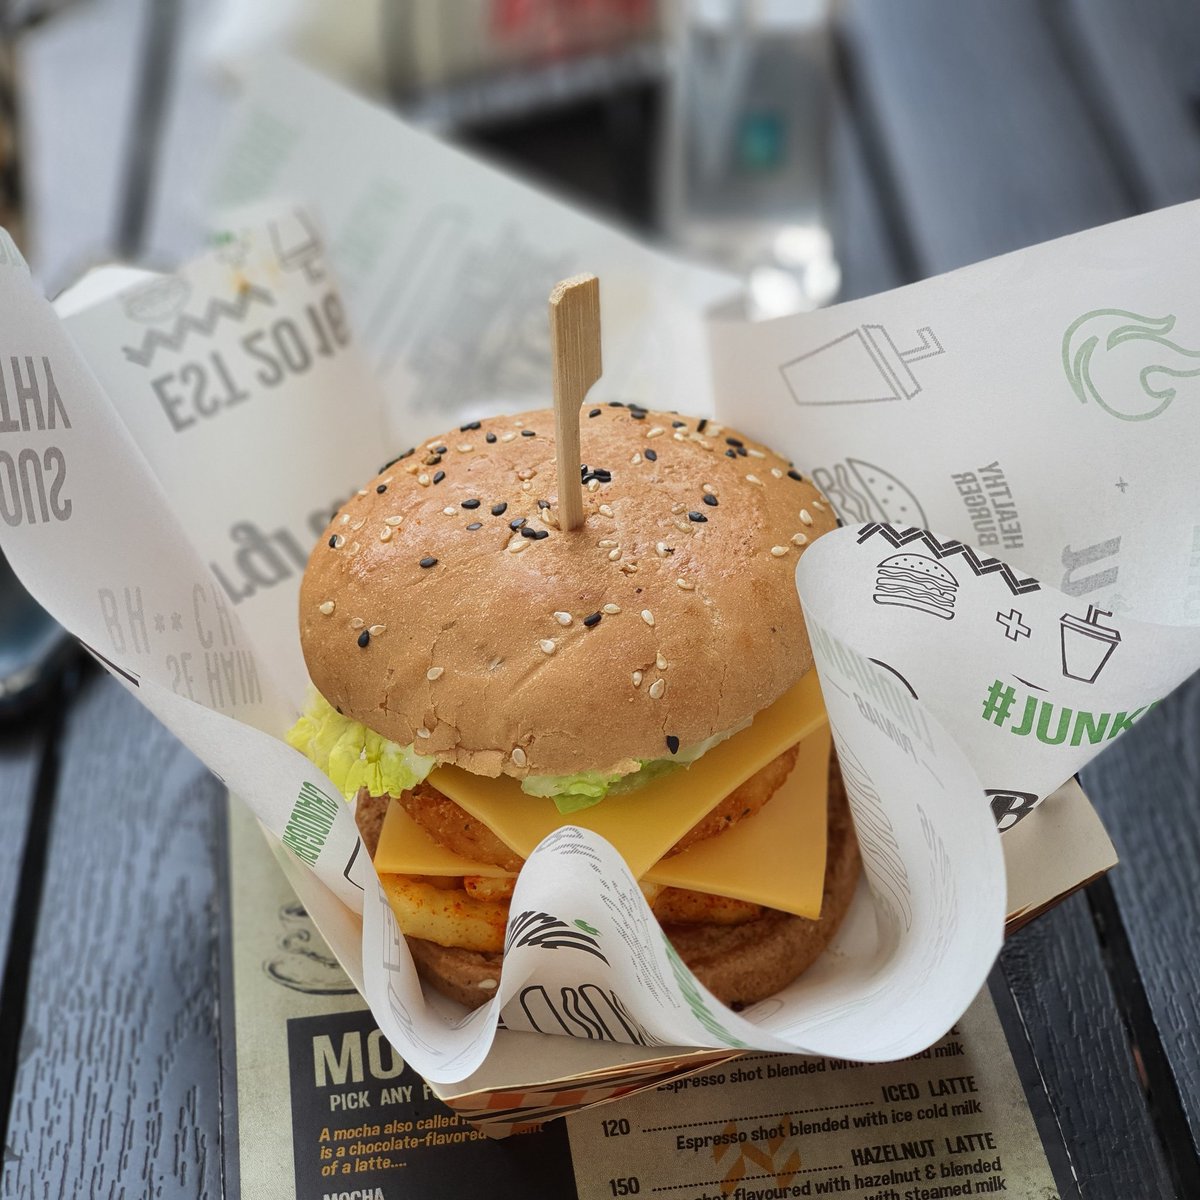 Cheese patty Burger

Burgrill Delhi
@burgrillindia 

#ishan_food_photography_travel 
#delhifood 
#burgrill 
#burger 
#awesome
#khana
#amul
#amulcheese
#tangy
#jorrfood
#delhibloggers 
#ahmedabadfood 
#india 
#cheese 
#patty 
#cheeseburger 
#spice 
#tastyfood 
#taste 
#tounge